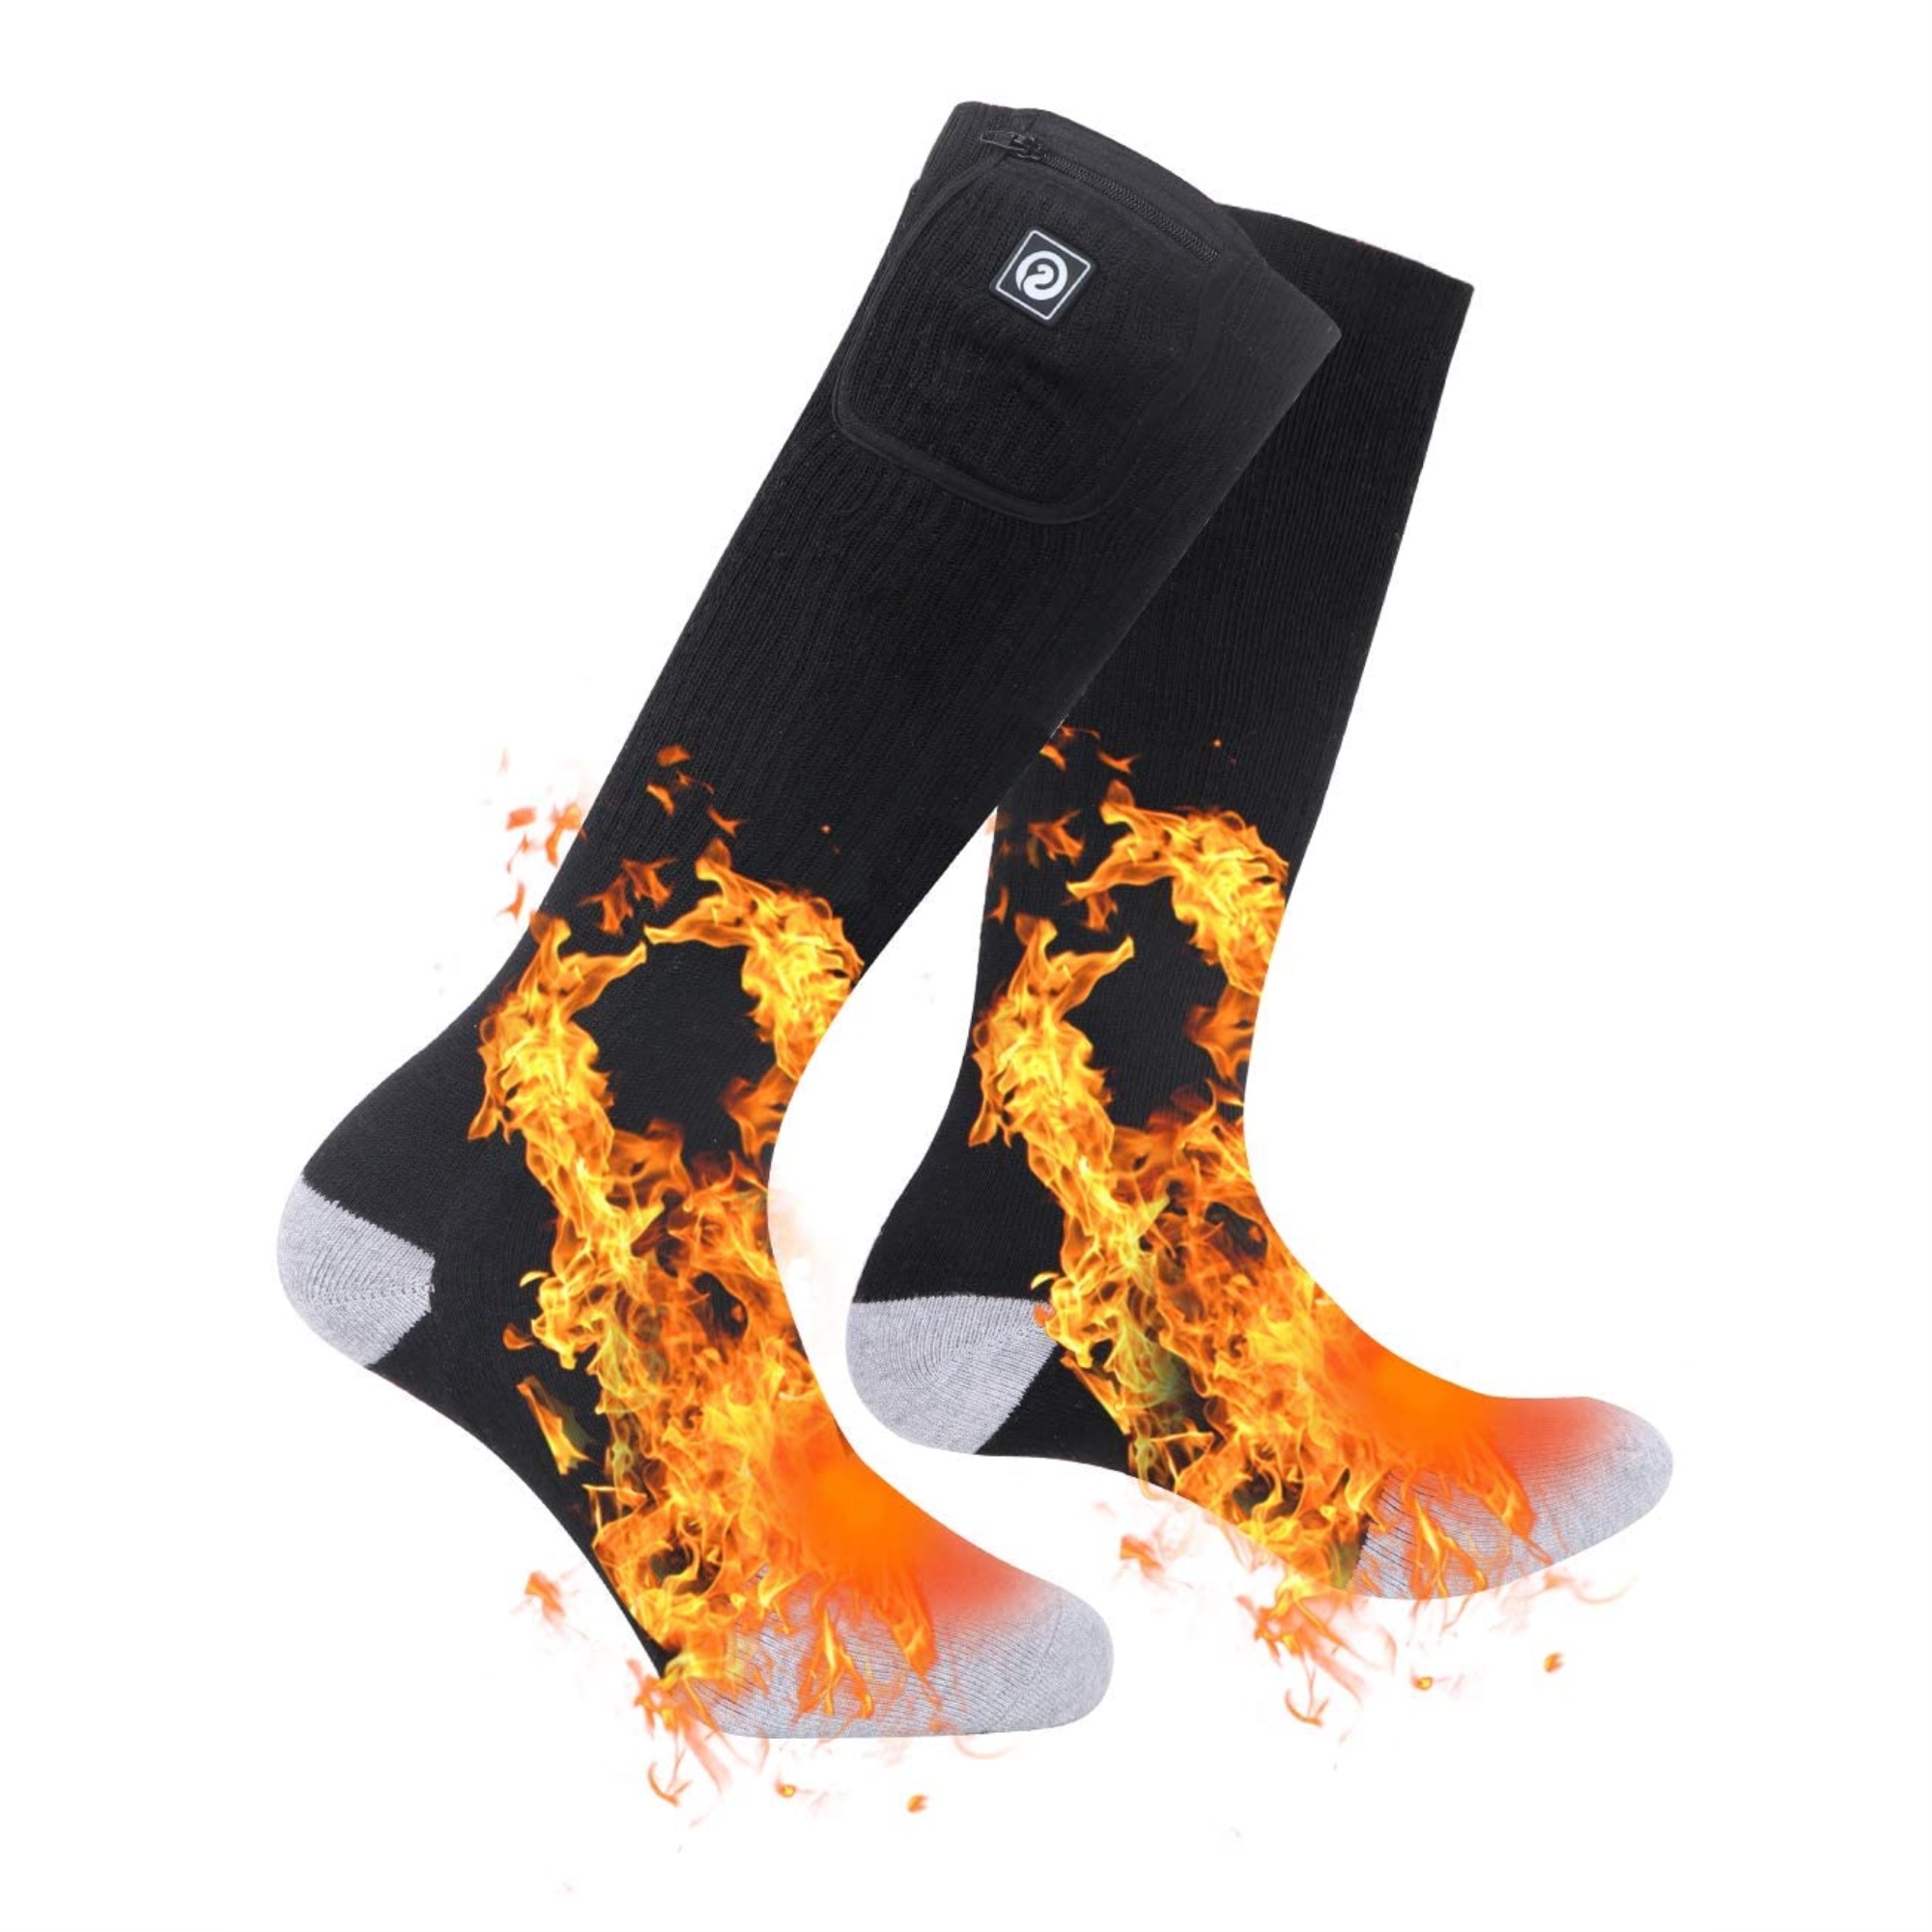 SAVIOR HEAT Heated Socks